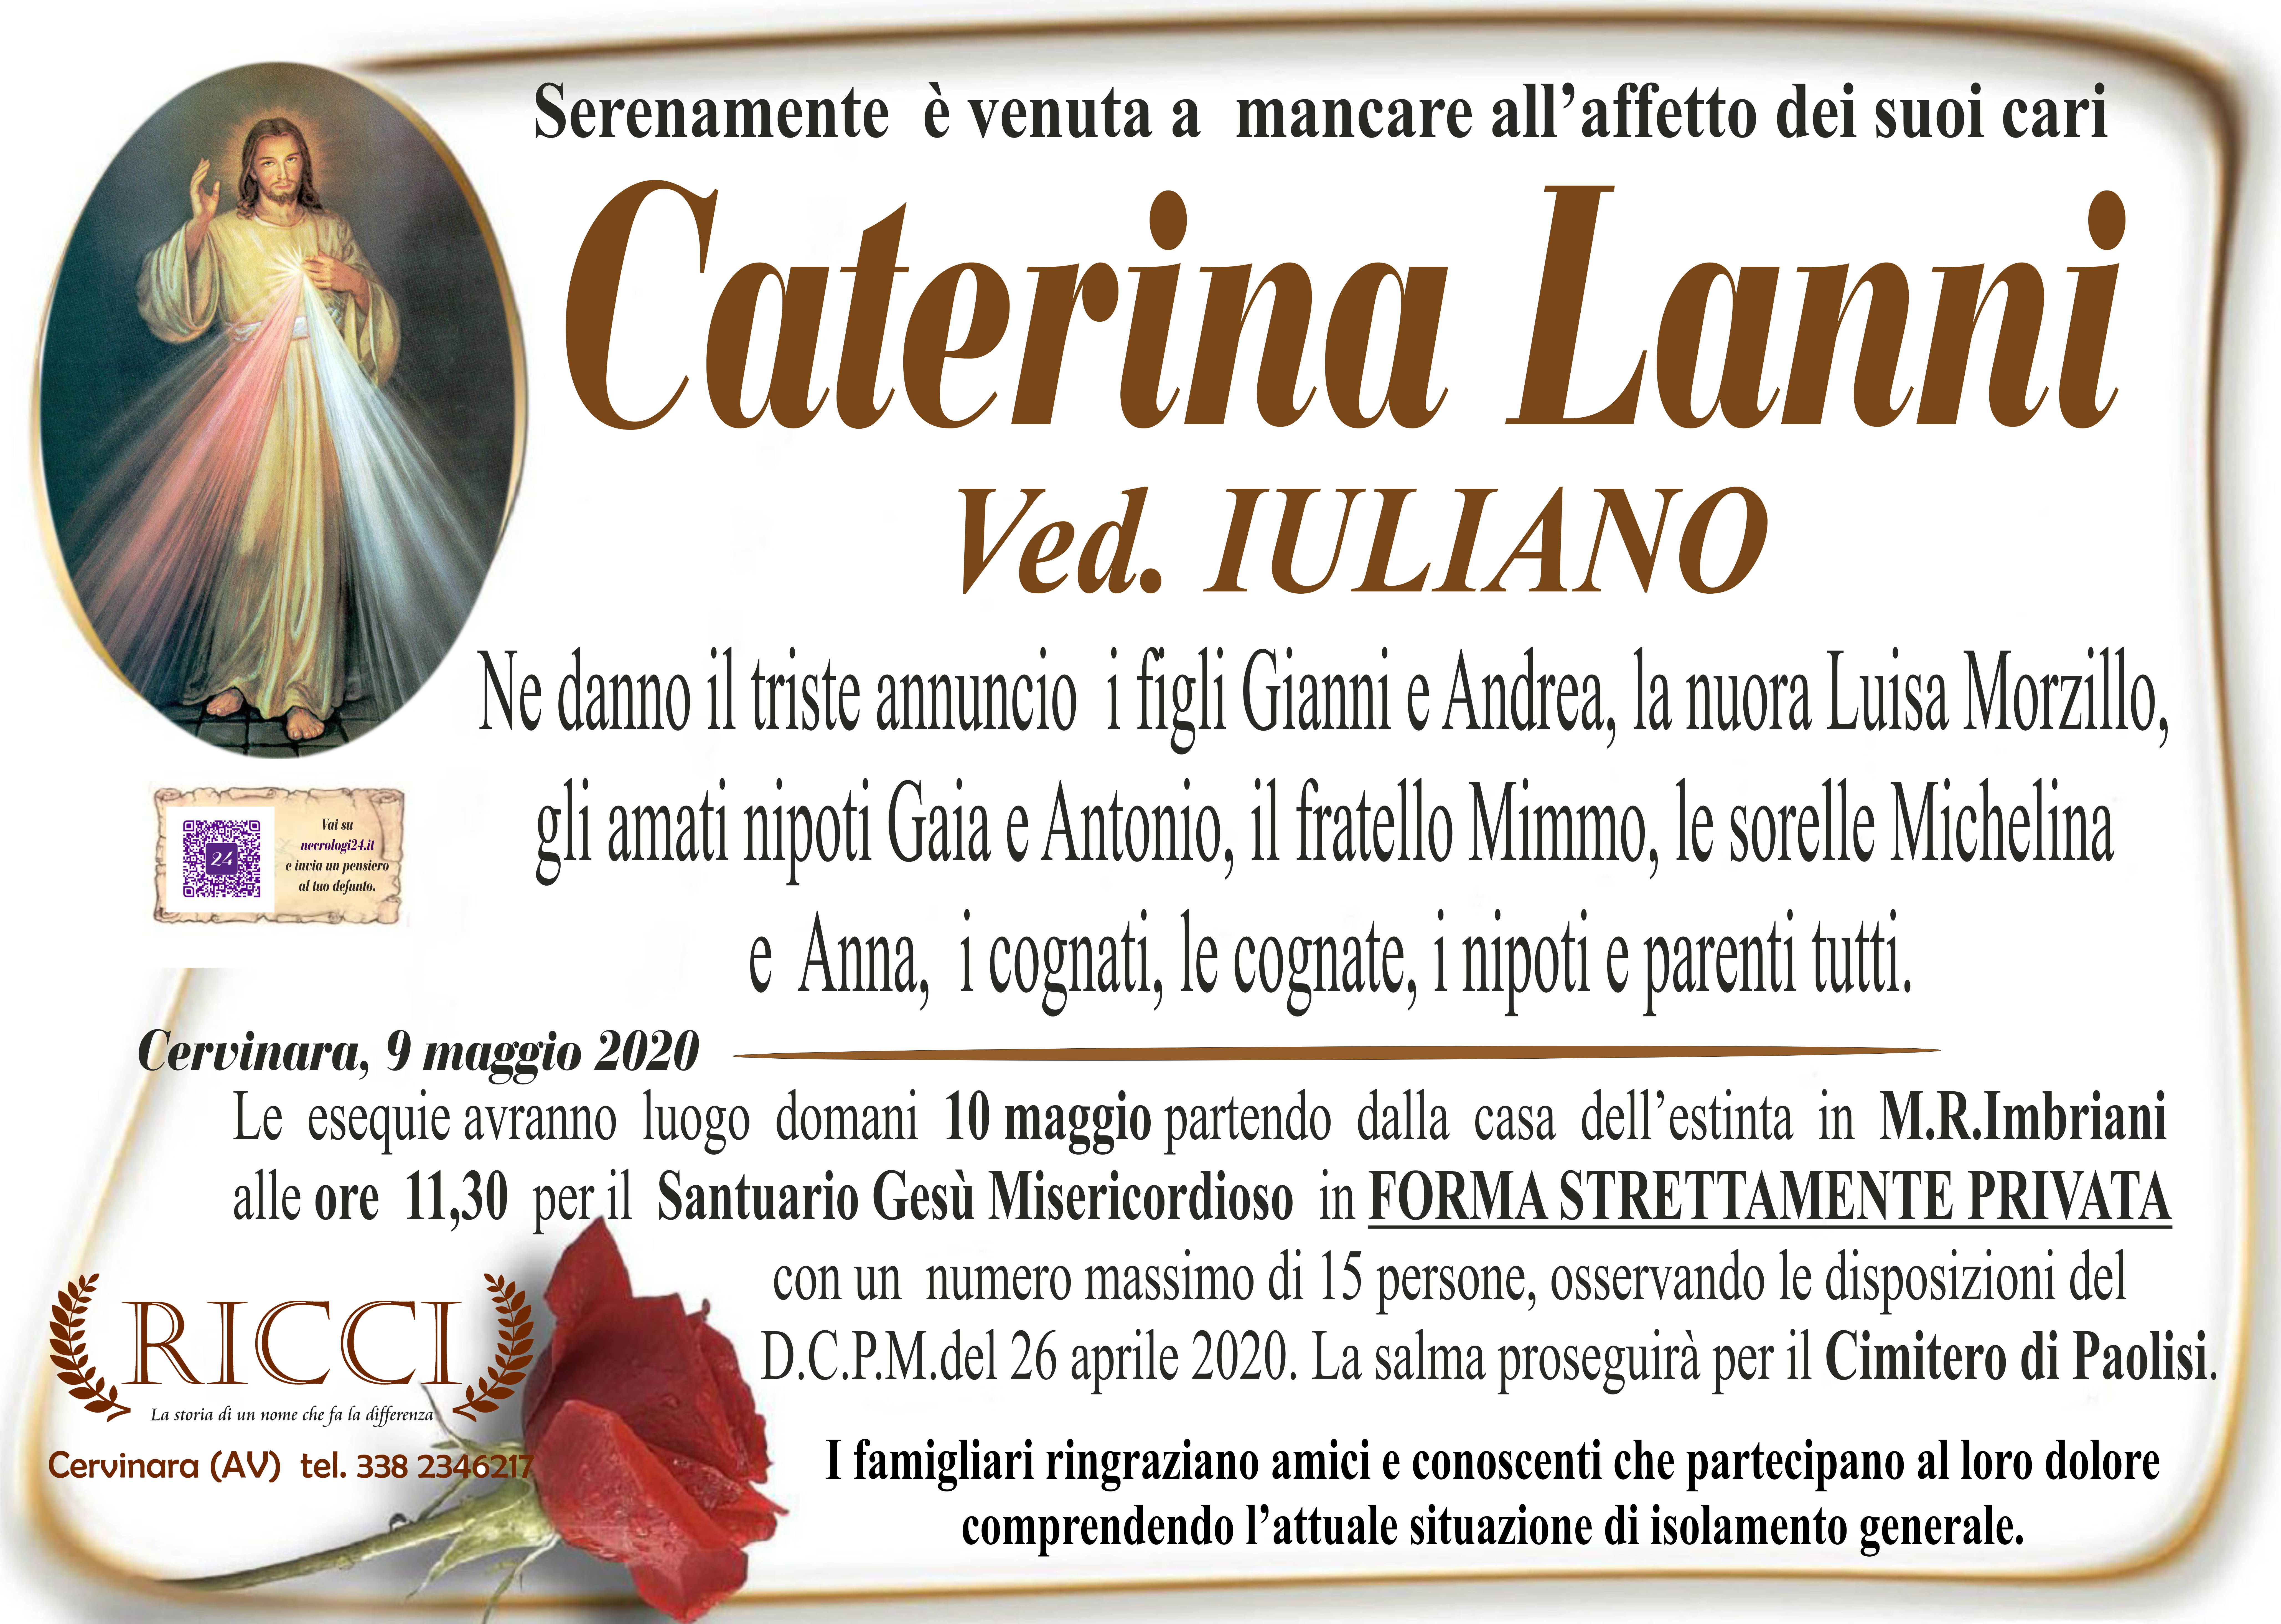 Caterina Lanni